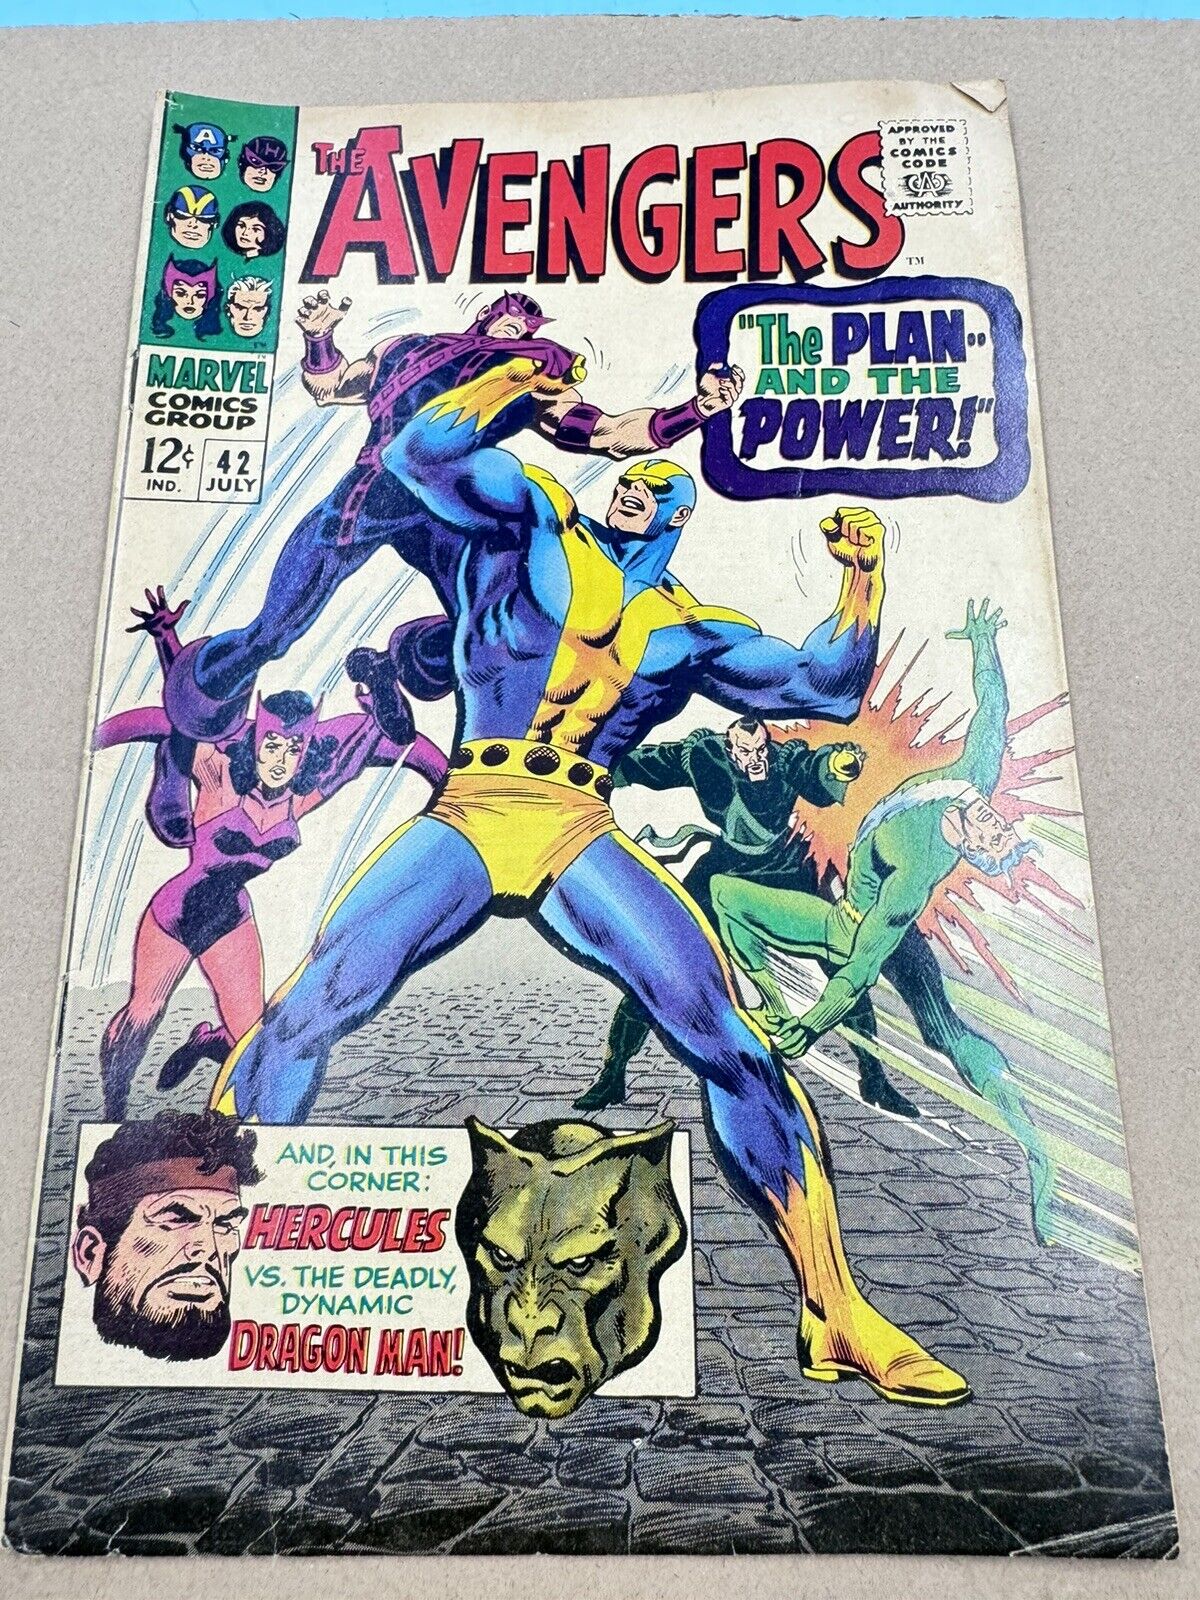 The AVENGERS #42  1967